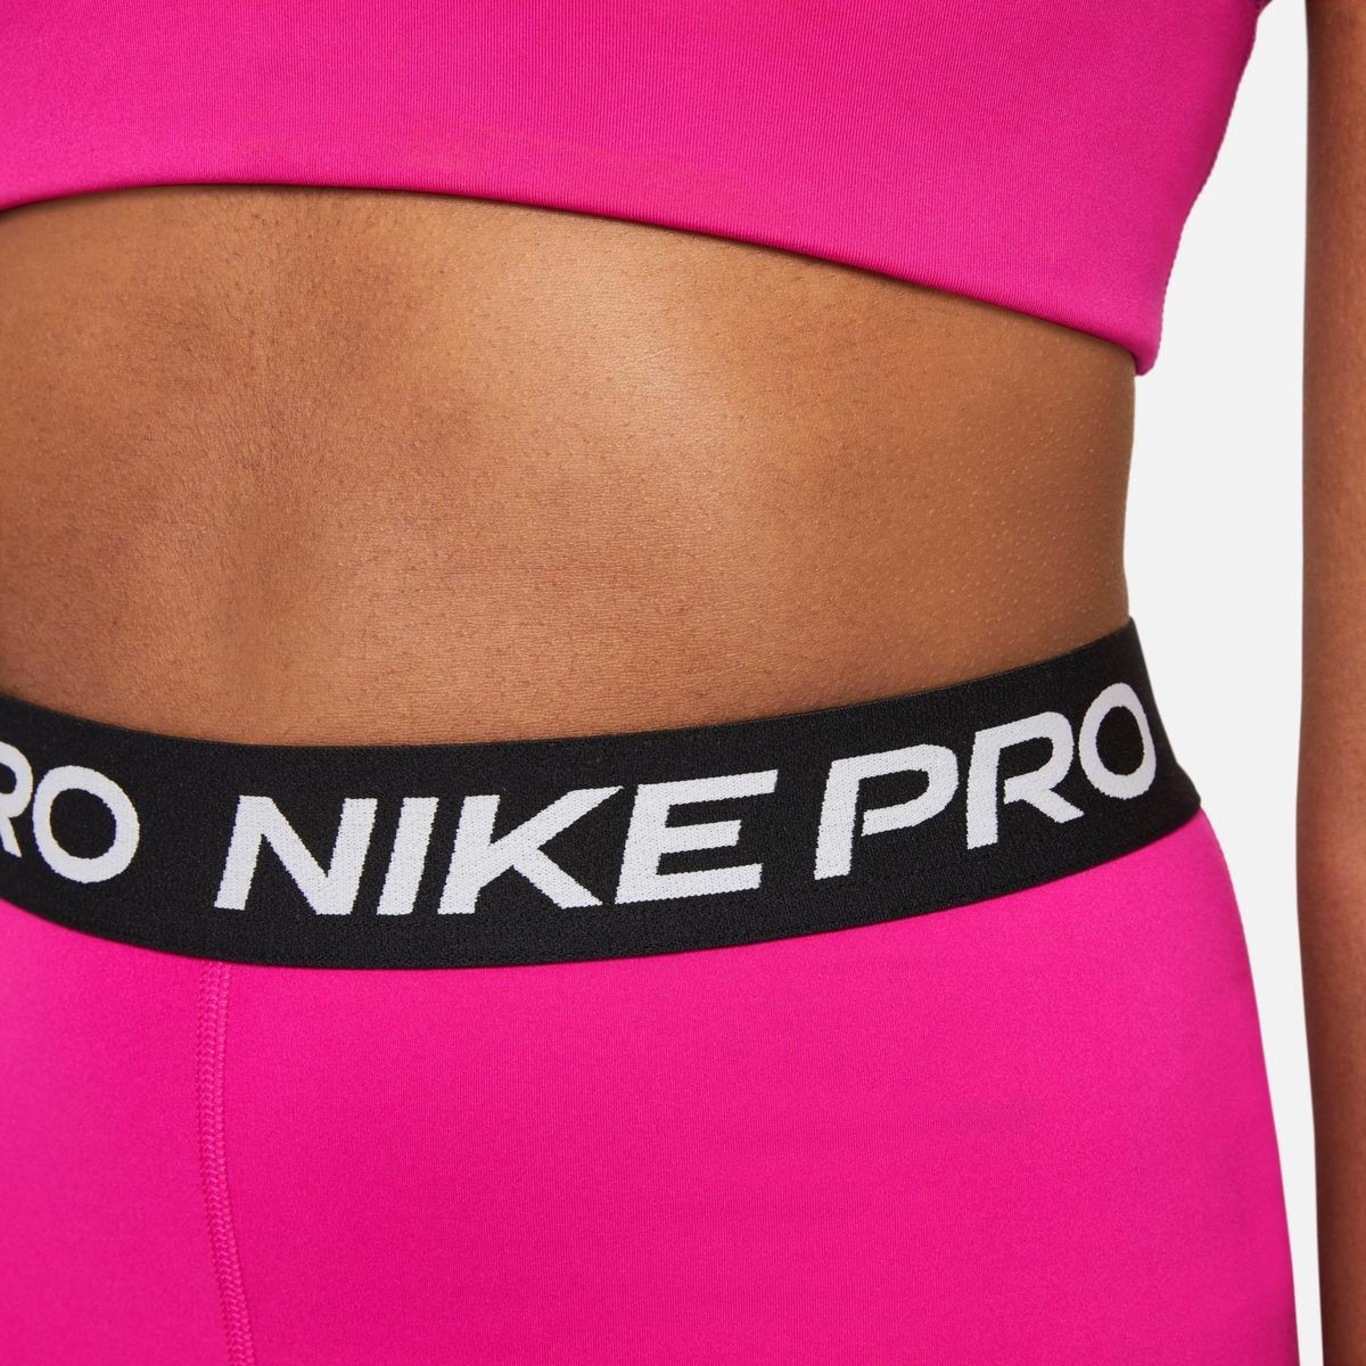 Short Nike Pro 5 Feminino - Preto+Branco